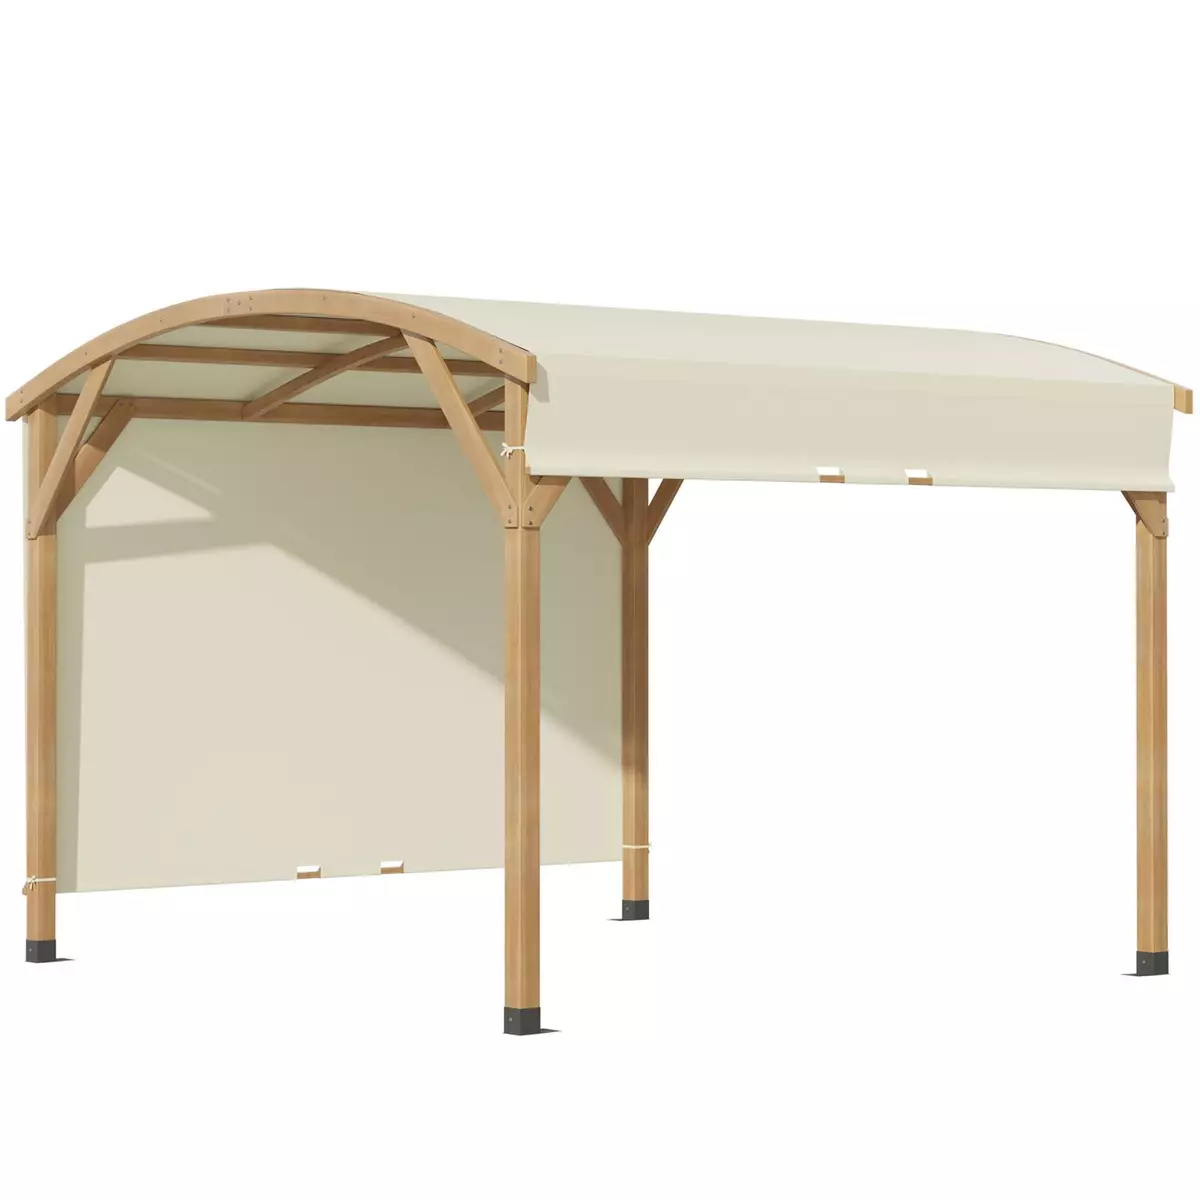 OUTSUNNY Pergola bois design arche toile de toit rétractable anti-UV UPF30+ dim. 3,2L x 3,08l x 2,42 m beige